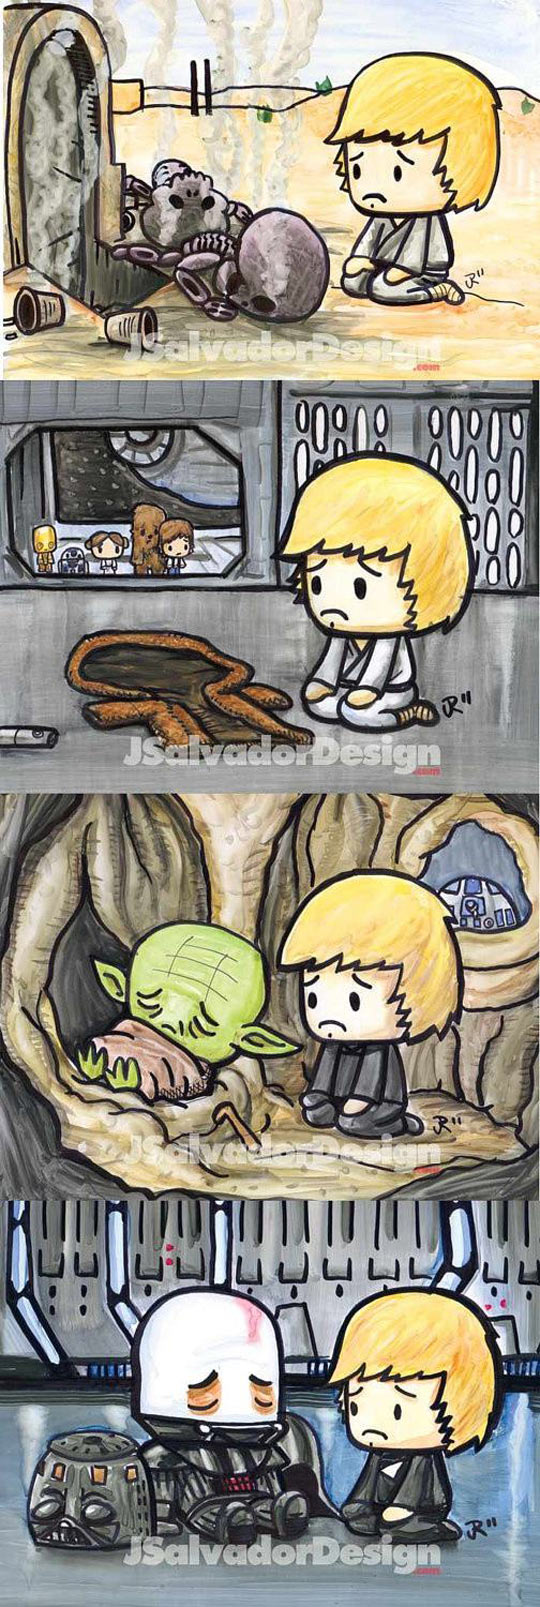 Poor Luke Skywalker